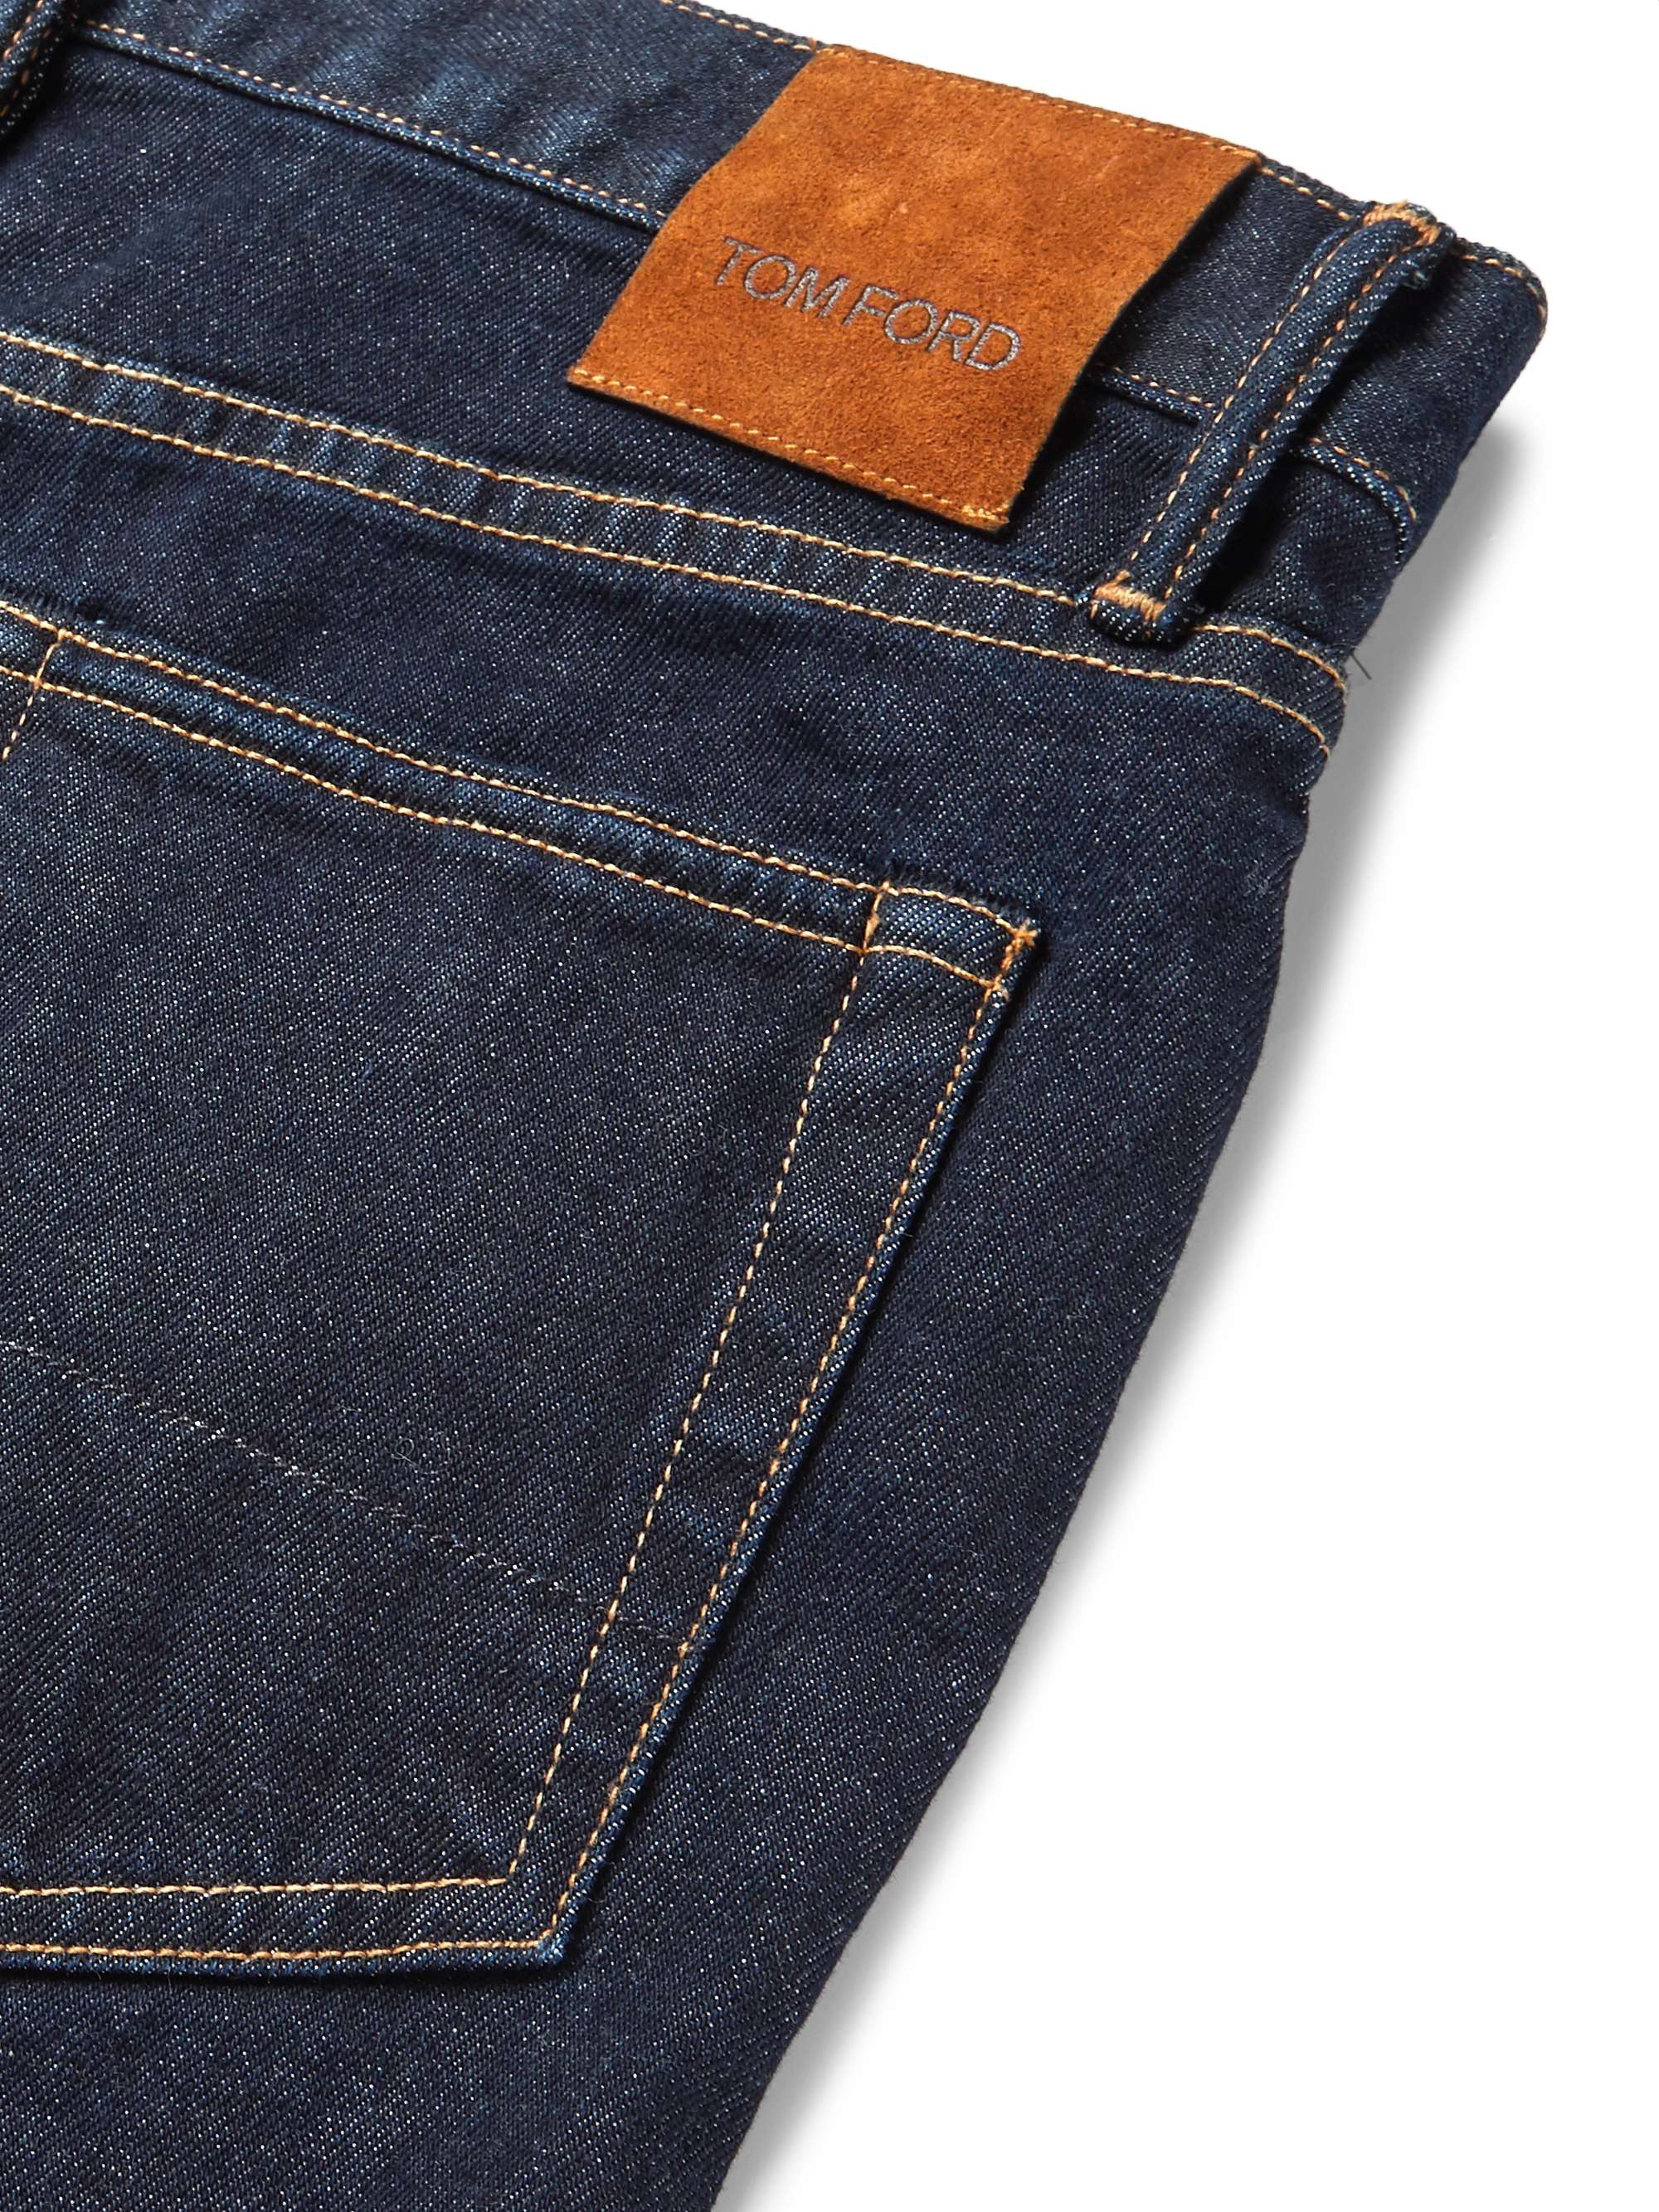 TOM FORD Slim-Fit Stretch-Denim Jeans